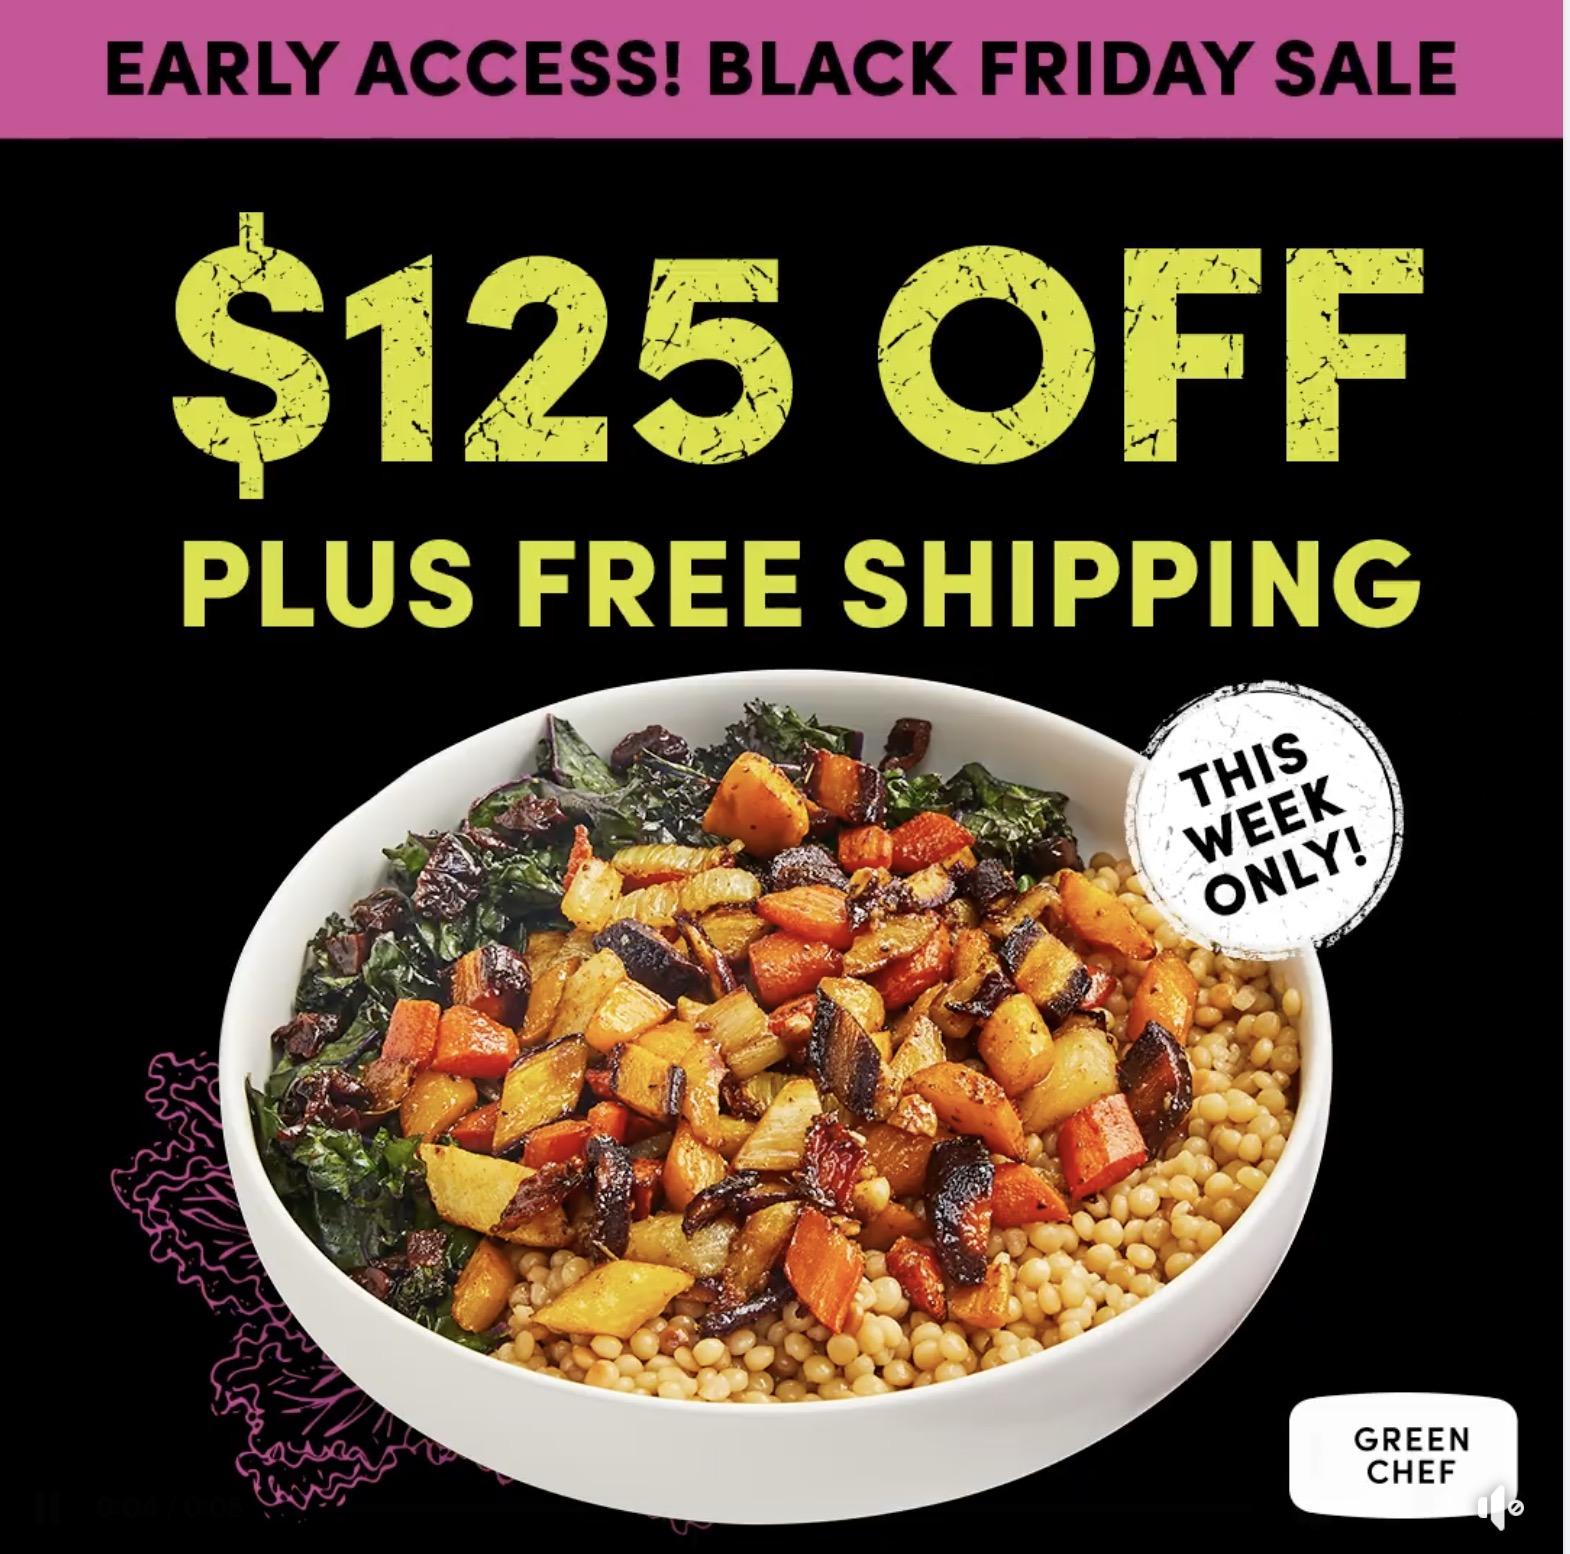 Green Chef Black Friday Coupon Code – Save $125!